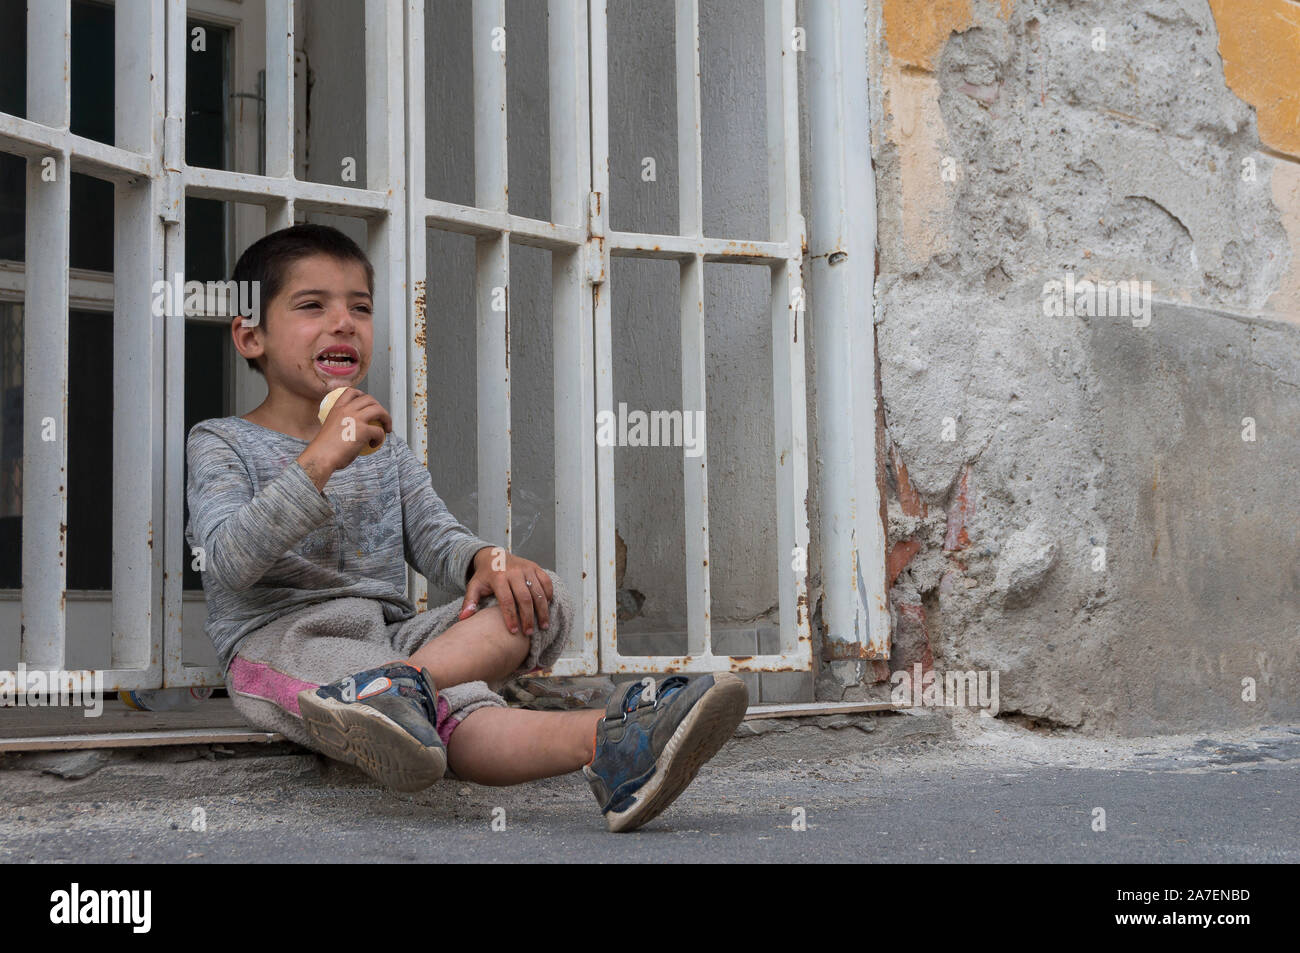 Poor sad little child eating ice cream on Children's Day Stock Photo